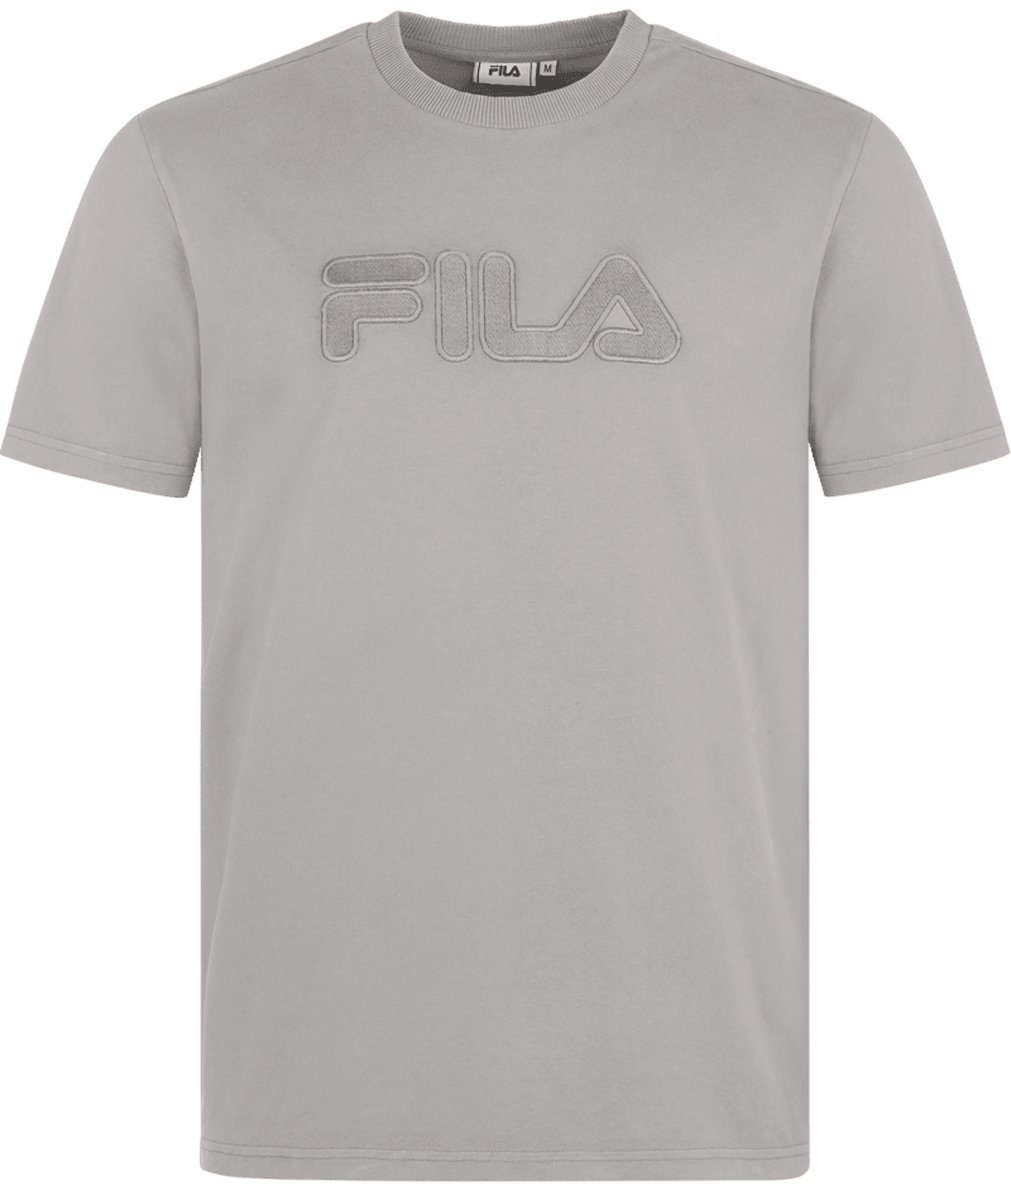 Fila T-Shirt Herren T-Shirt BUEK - Rundhals, Kurzarm Grau